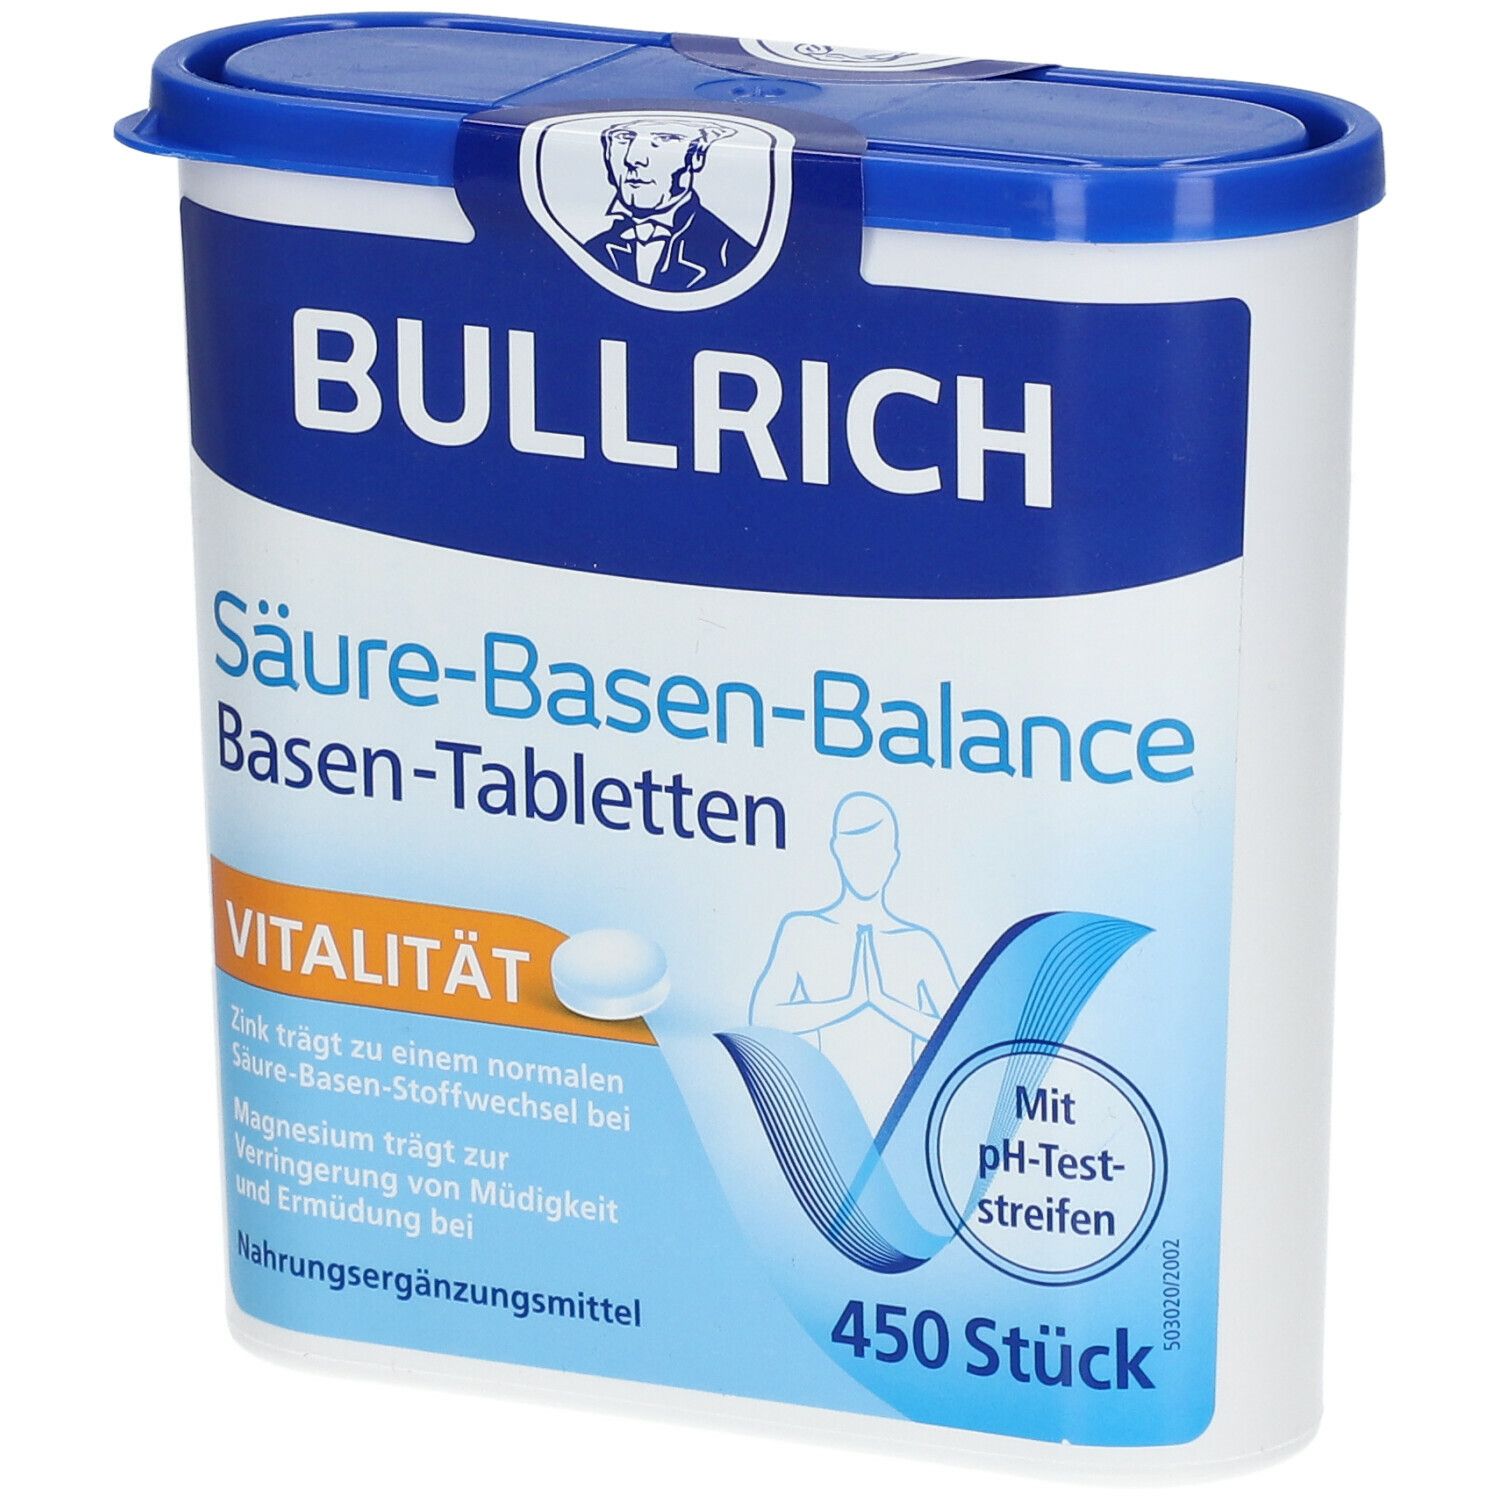 Bullrich Bilan acide-base